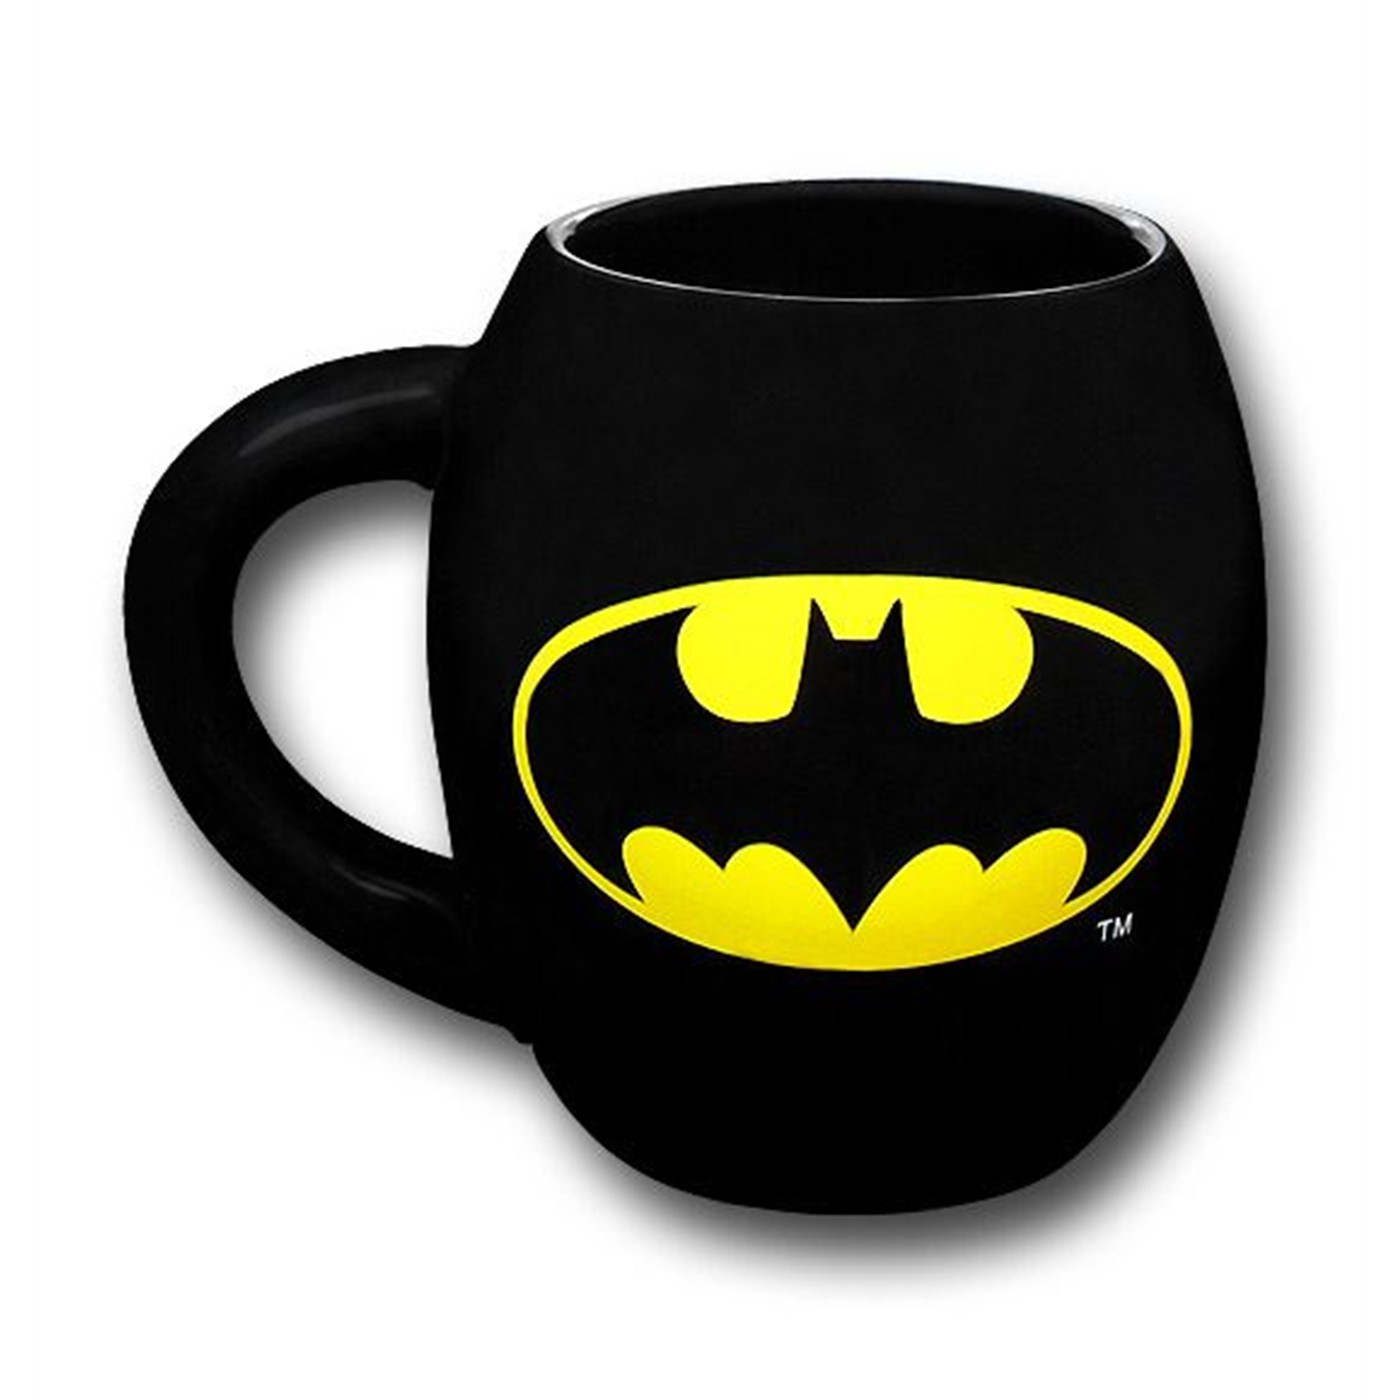 Batman Image and Symbol Ceramic Barrel Mug